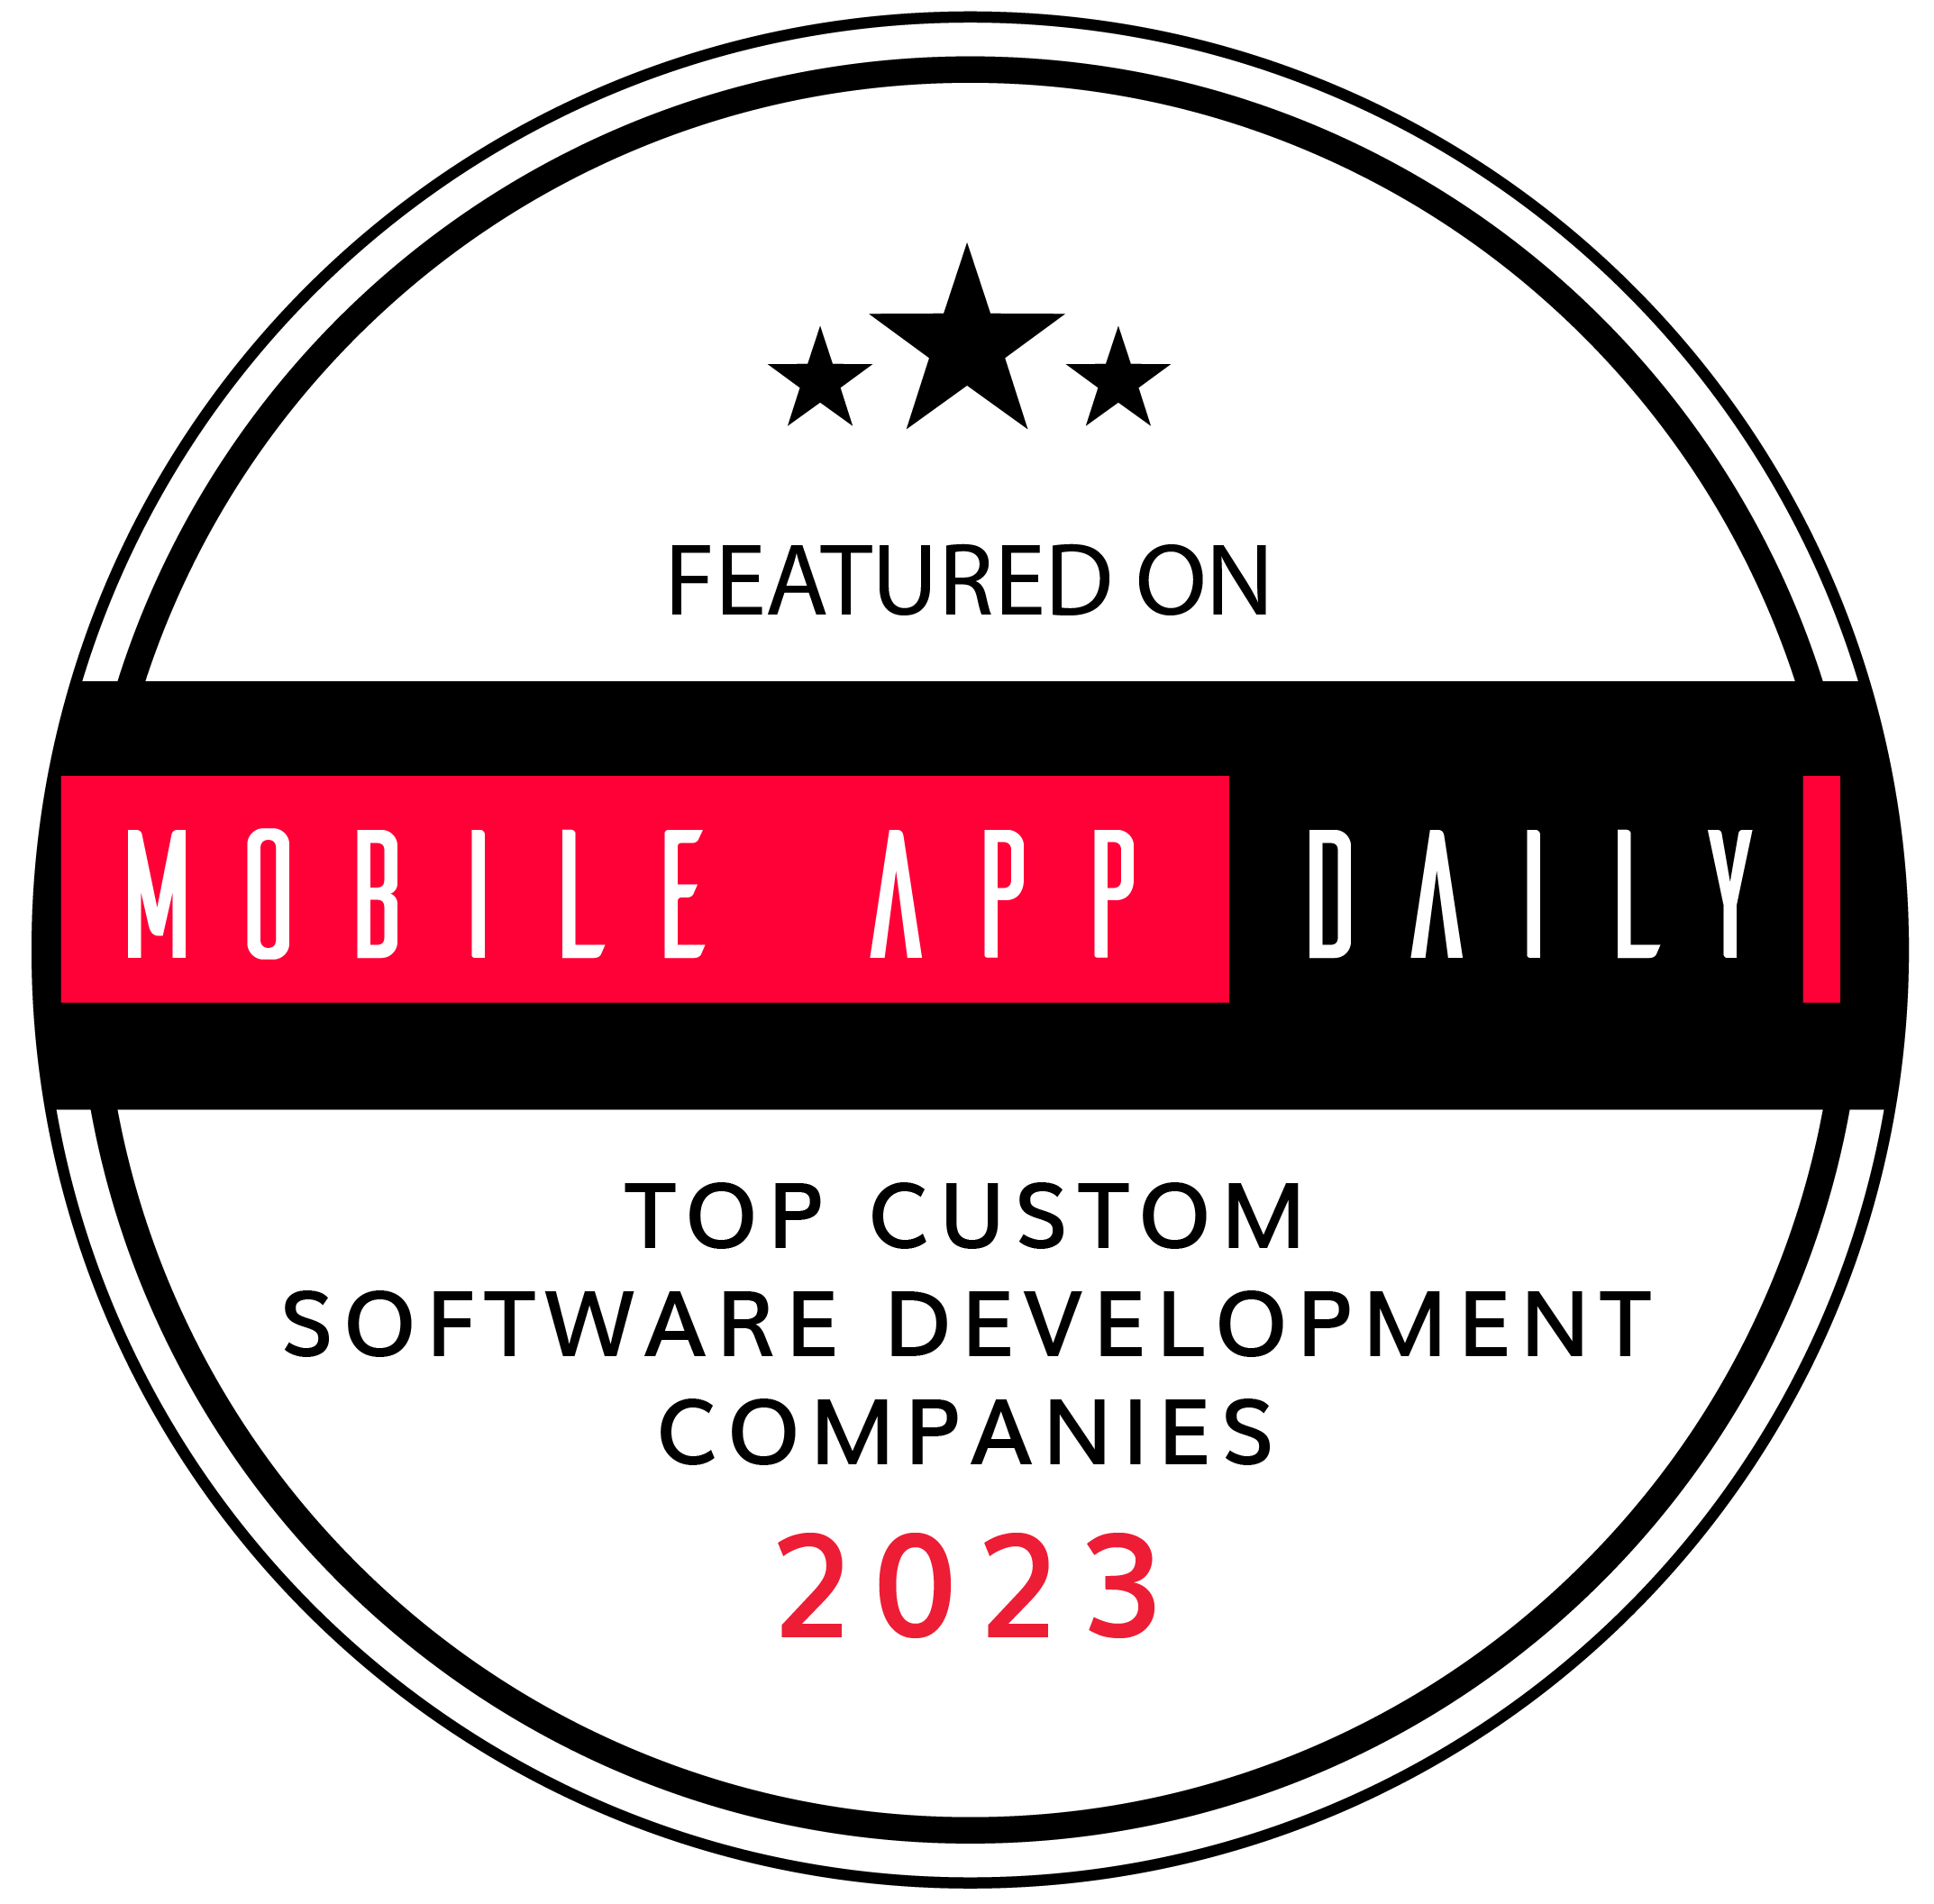 mobile app daily, top custom software development companies, custom software development companies